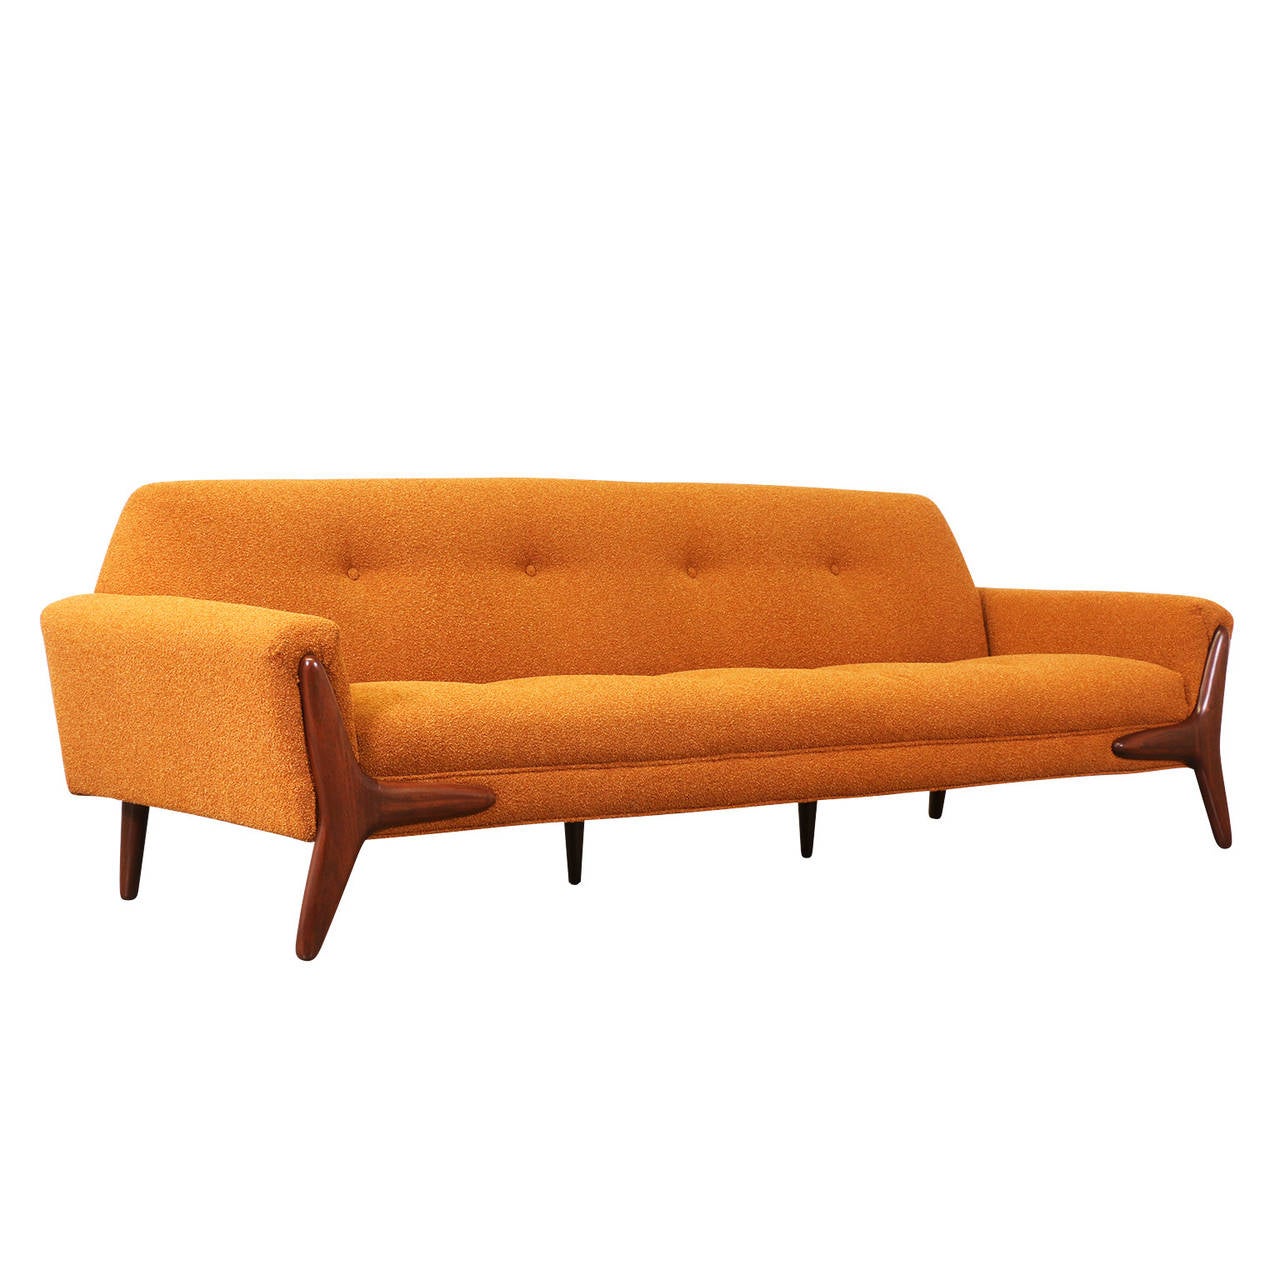 American Adrian Pearsall Sofa for Craft Associates